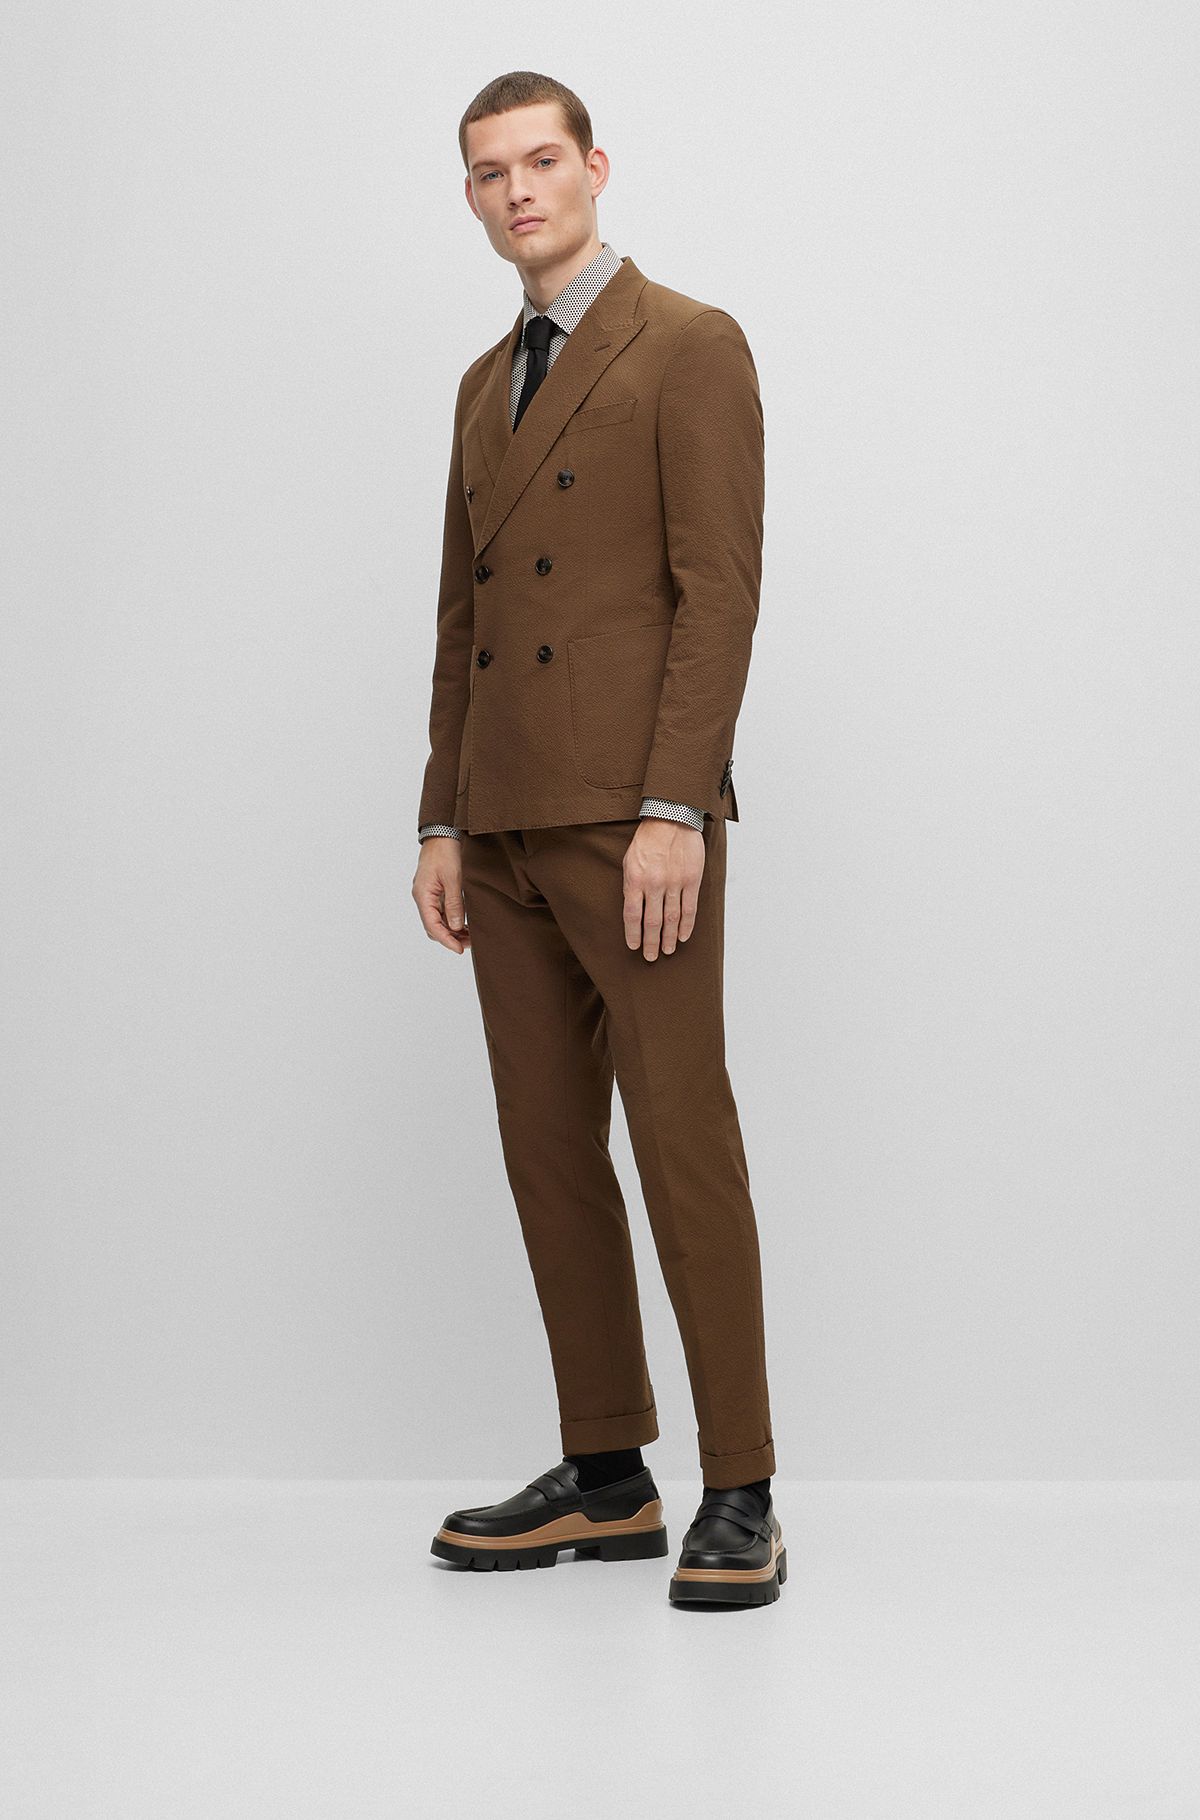 Louis Féraud designer suit, beige satin and Louis Féraud…